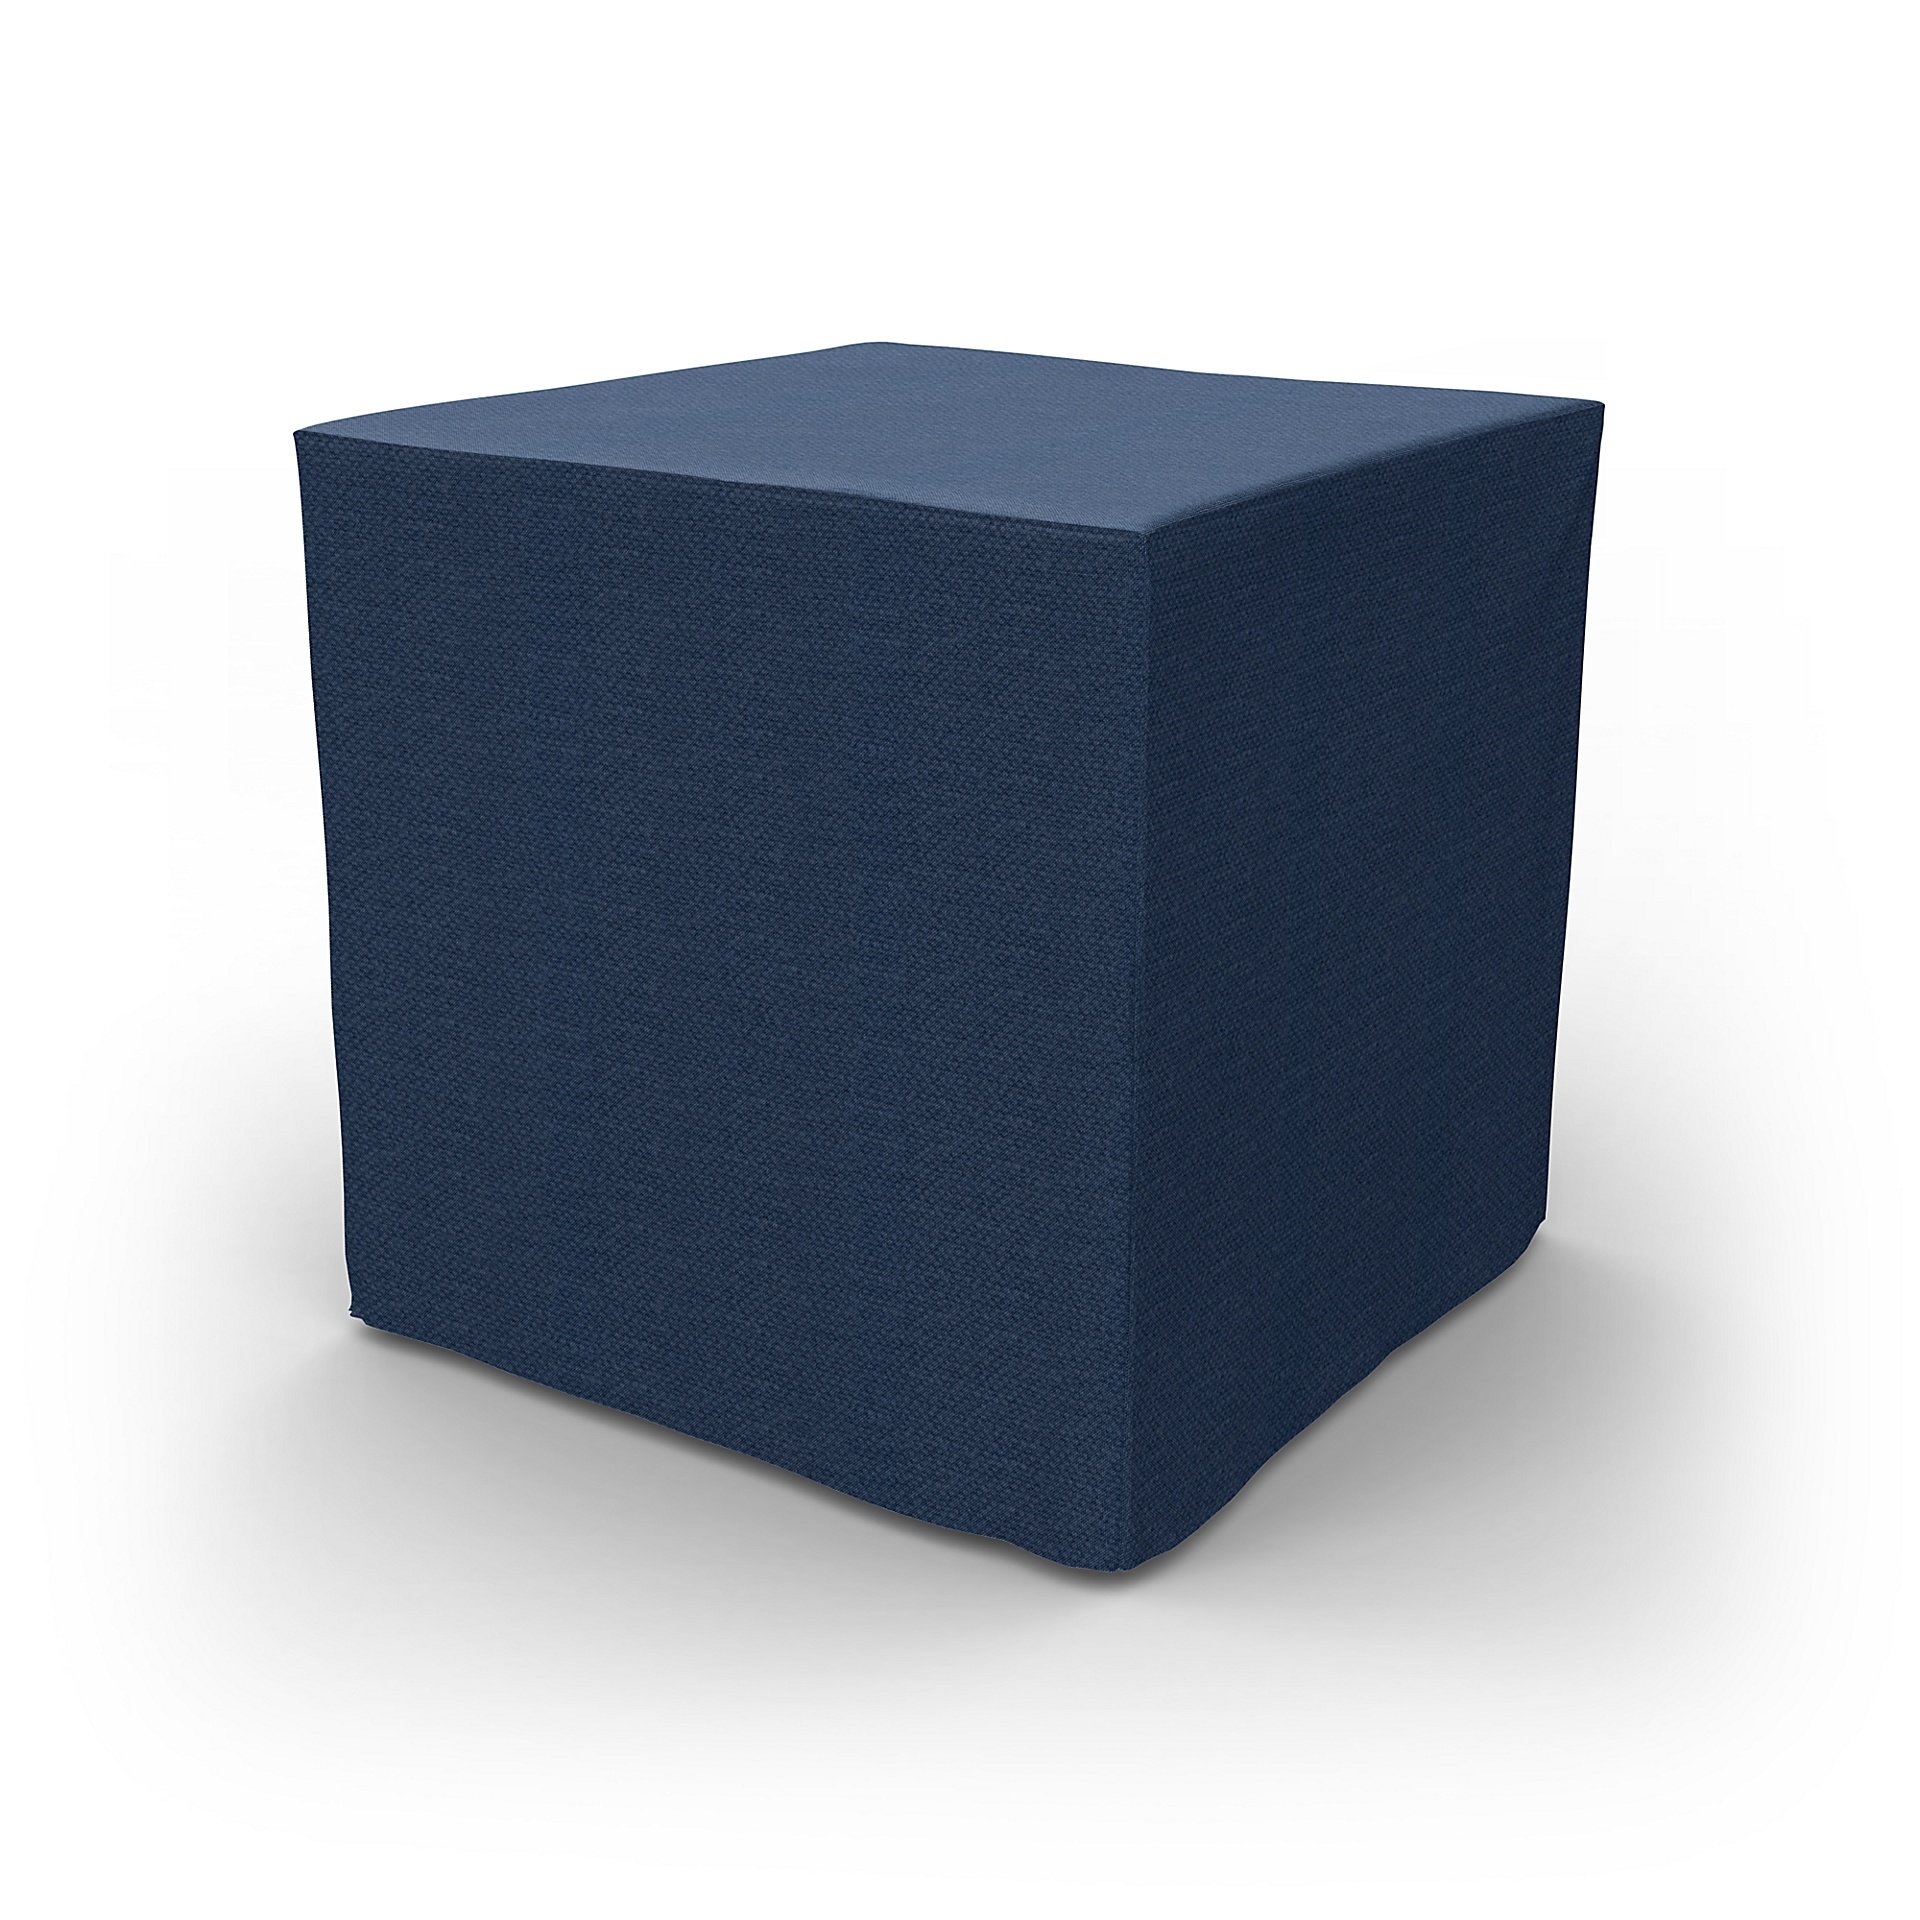 IKEA - Pallbo Footstool Cover, Navy Blue, Linen - Bemz